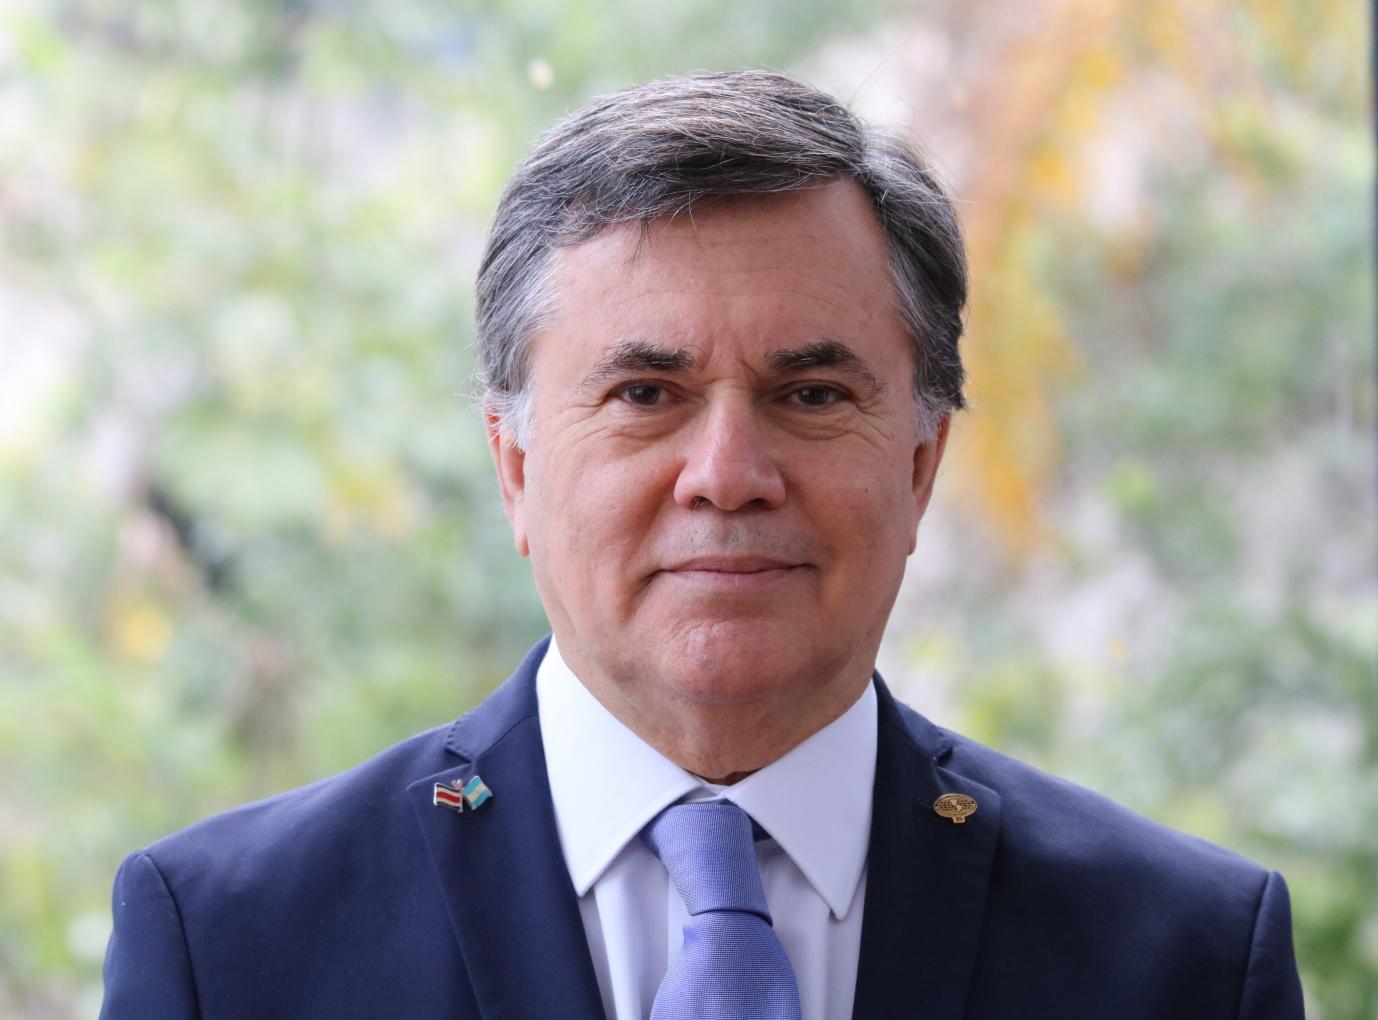 IICA Director-General, Manuel Otero